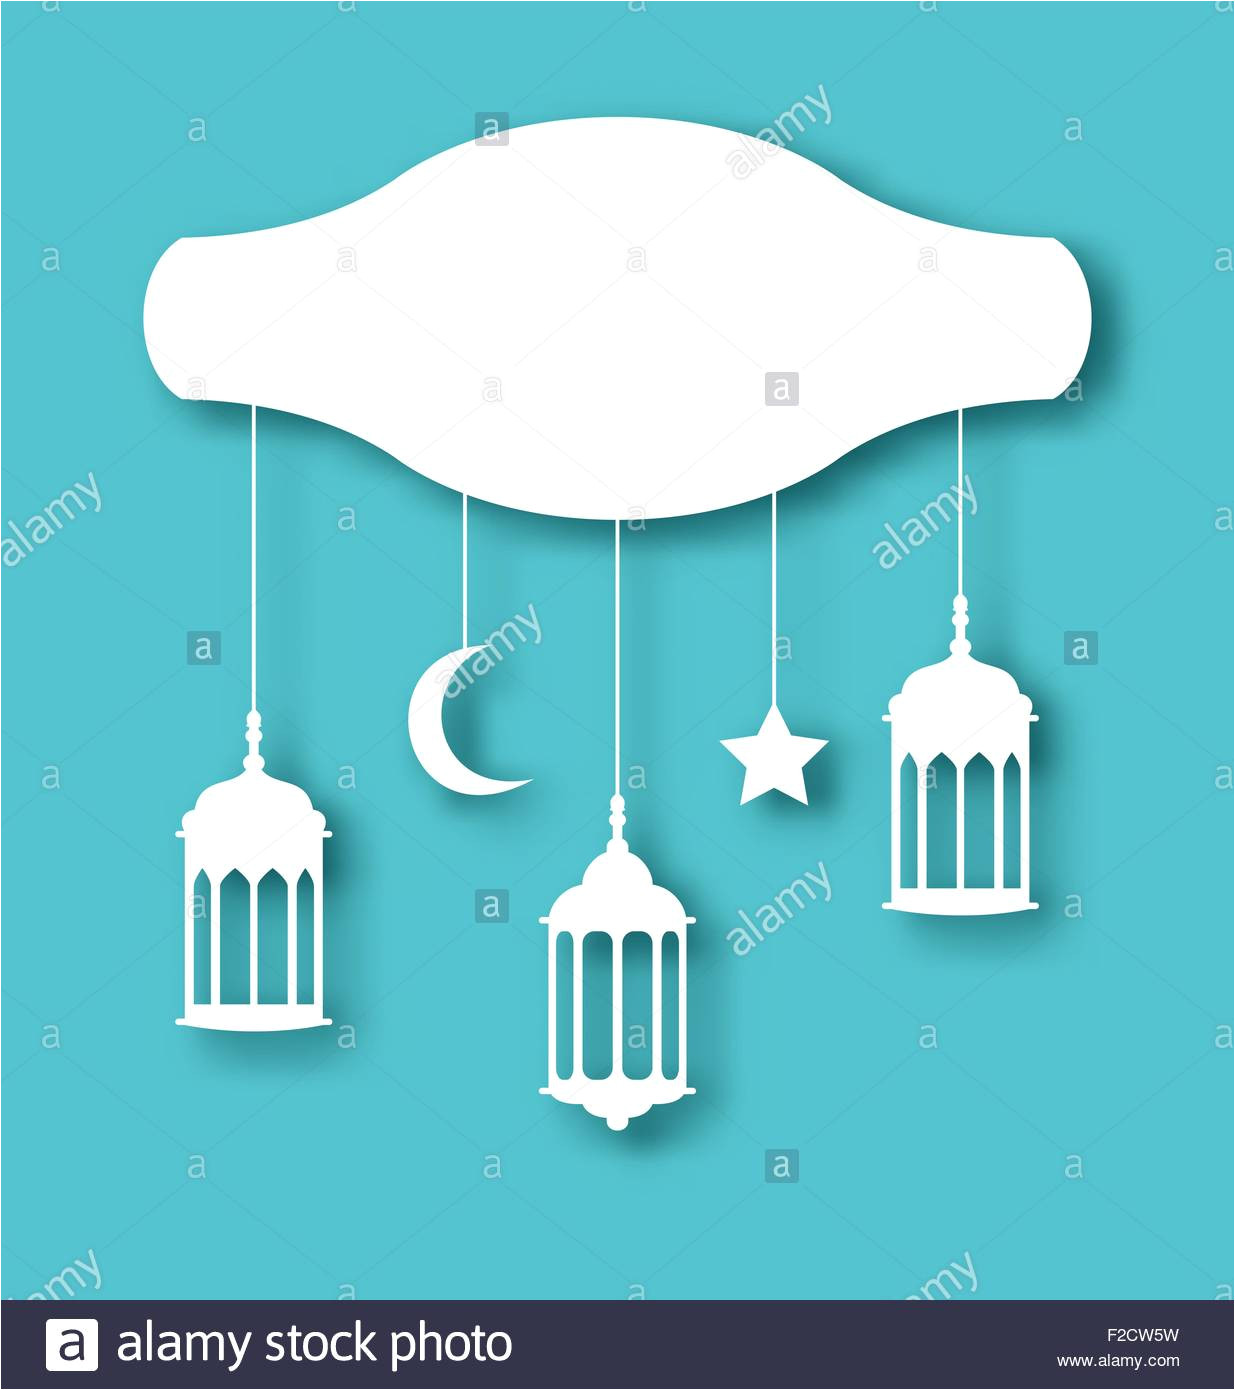 Greeting Card Of Eid Mubarak Eid Mubarak Greeting Card with Decoration Stock Vector Art